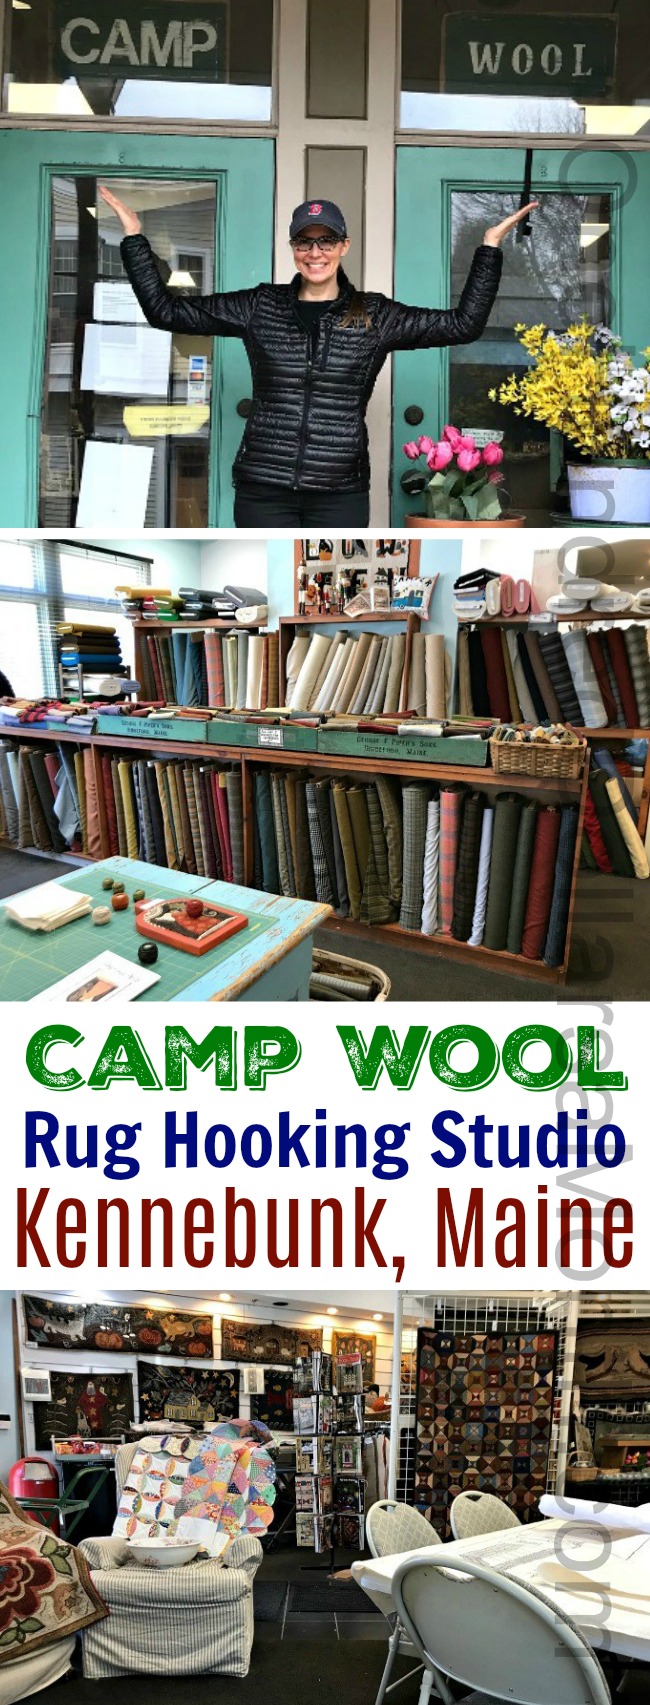 Camp Wool – Kennebunk, Maine